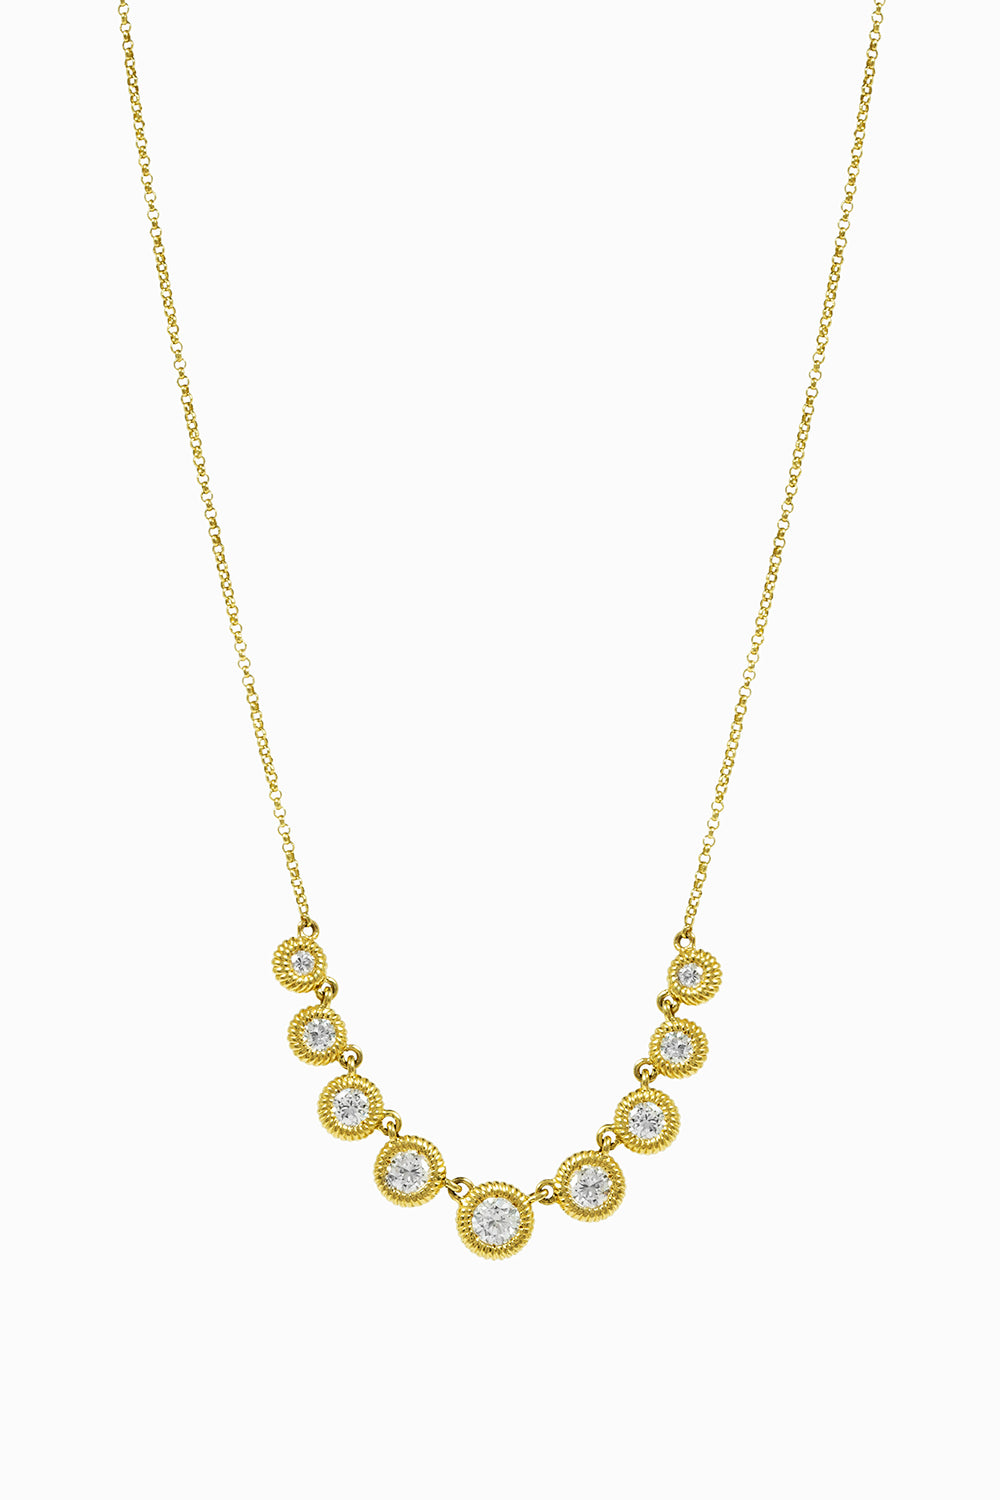 9 diamonds Cabo necklace